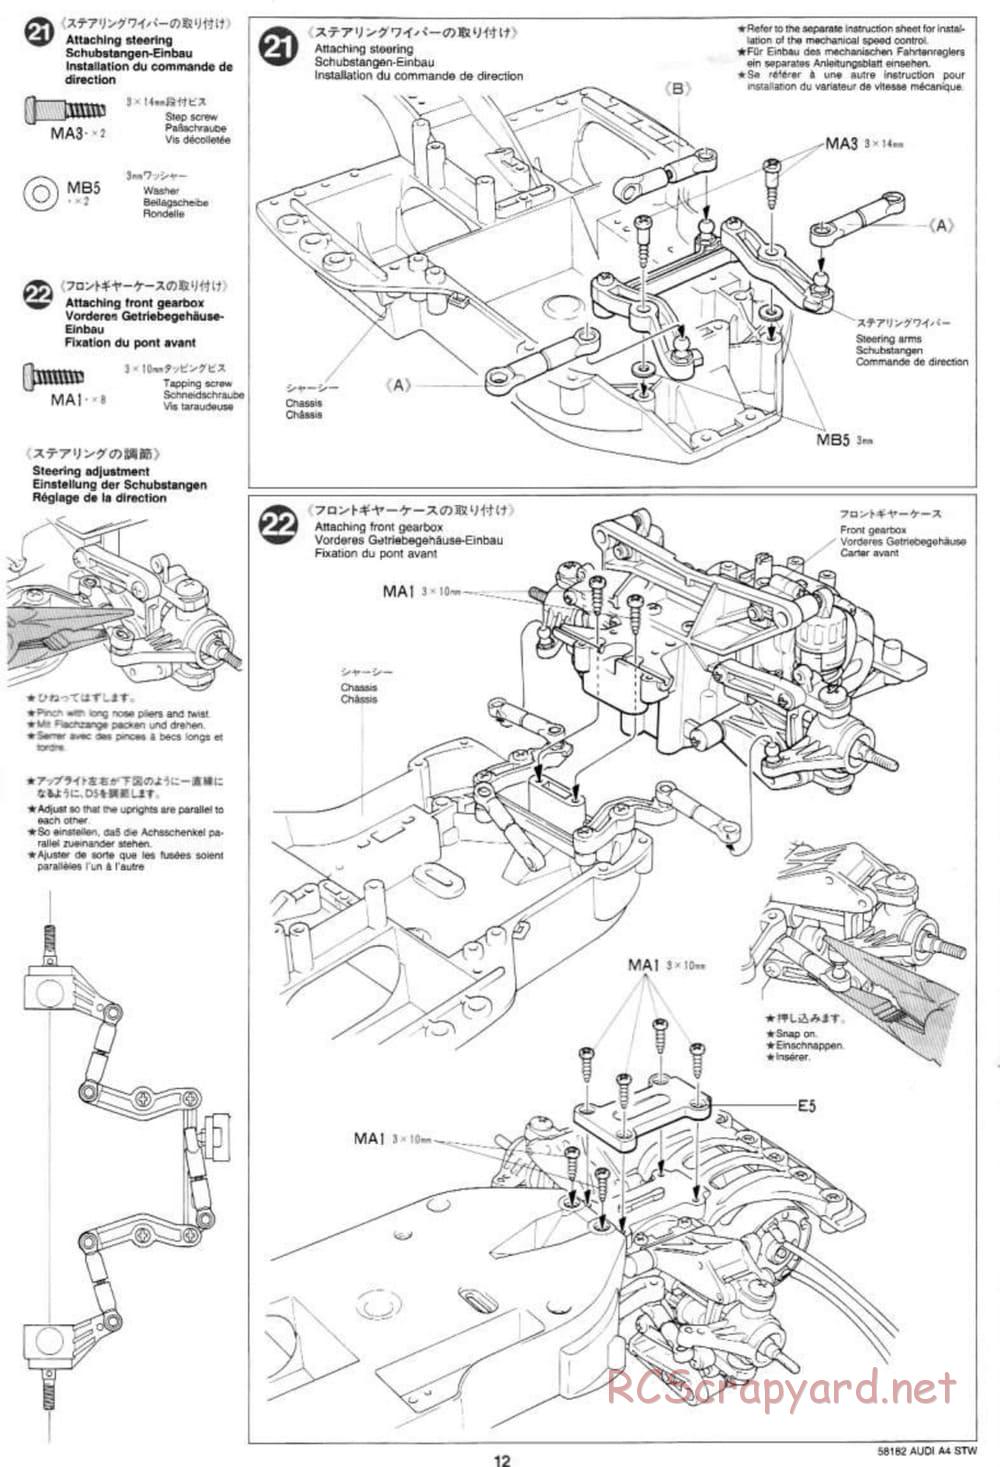 Tamiya - Audi A4 STW - TA-03F Chassis - Manual - Page 12